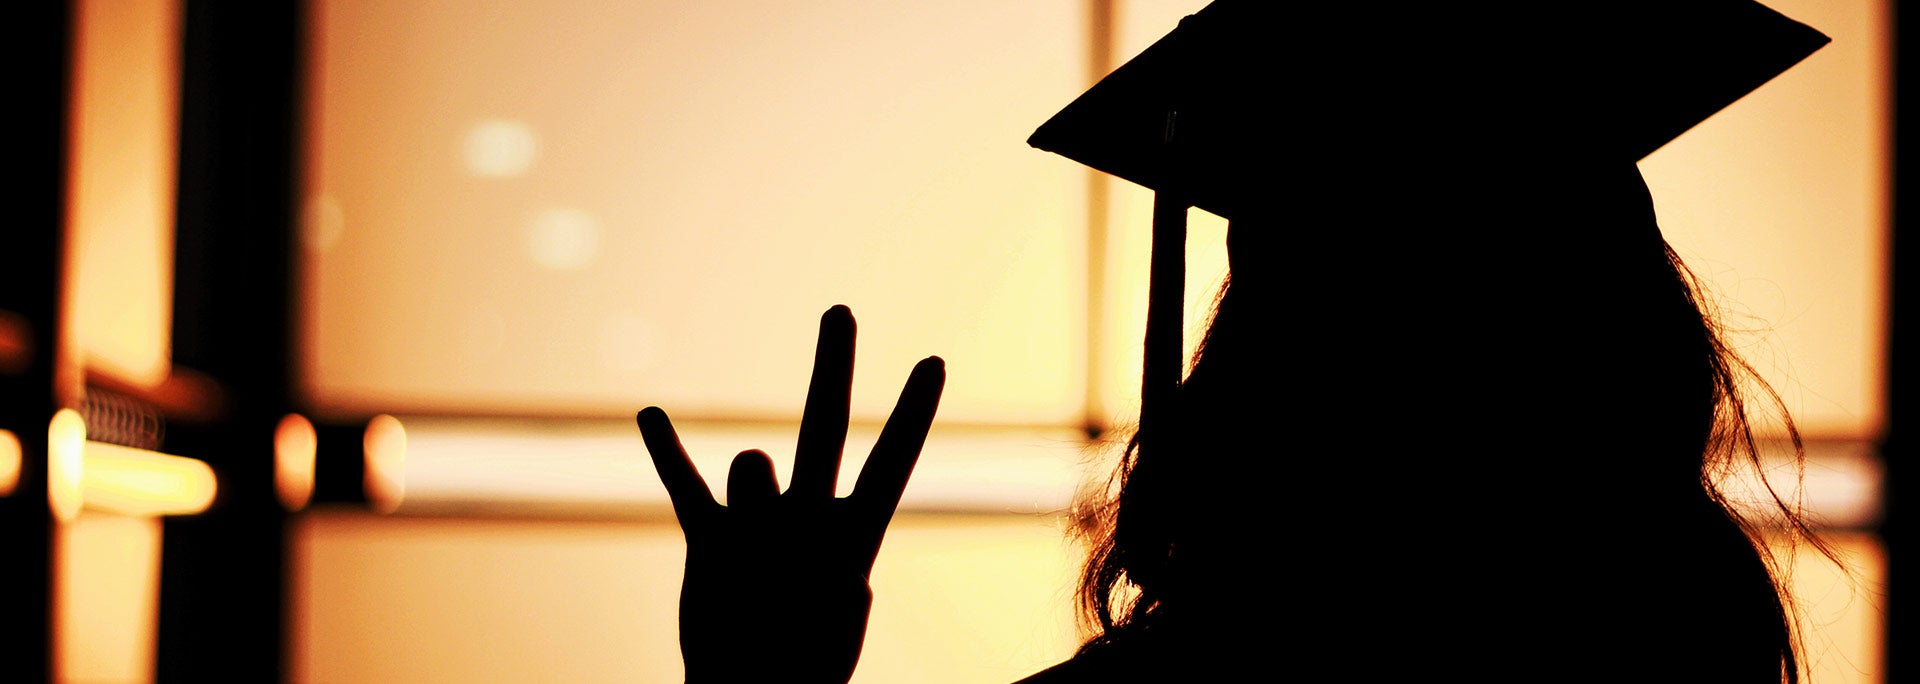 Silhouette of student in graduation cap